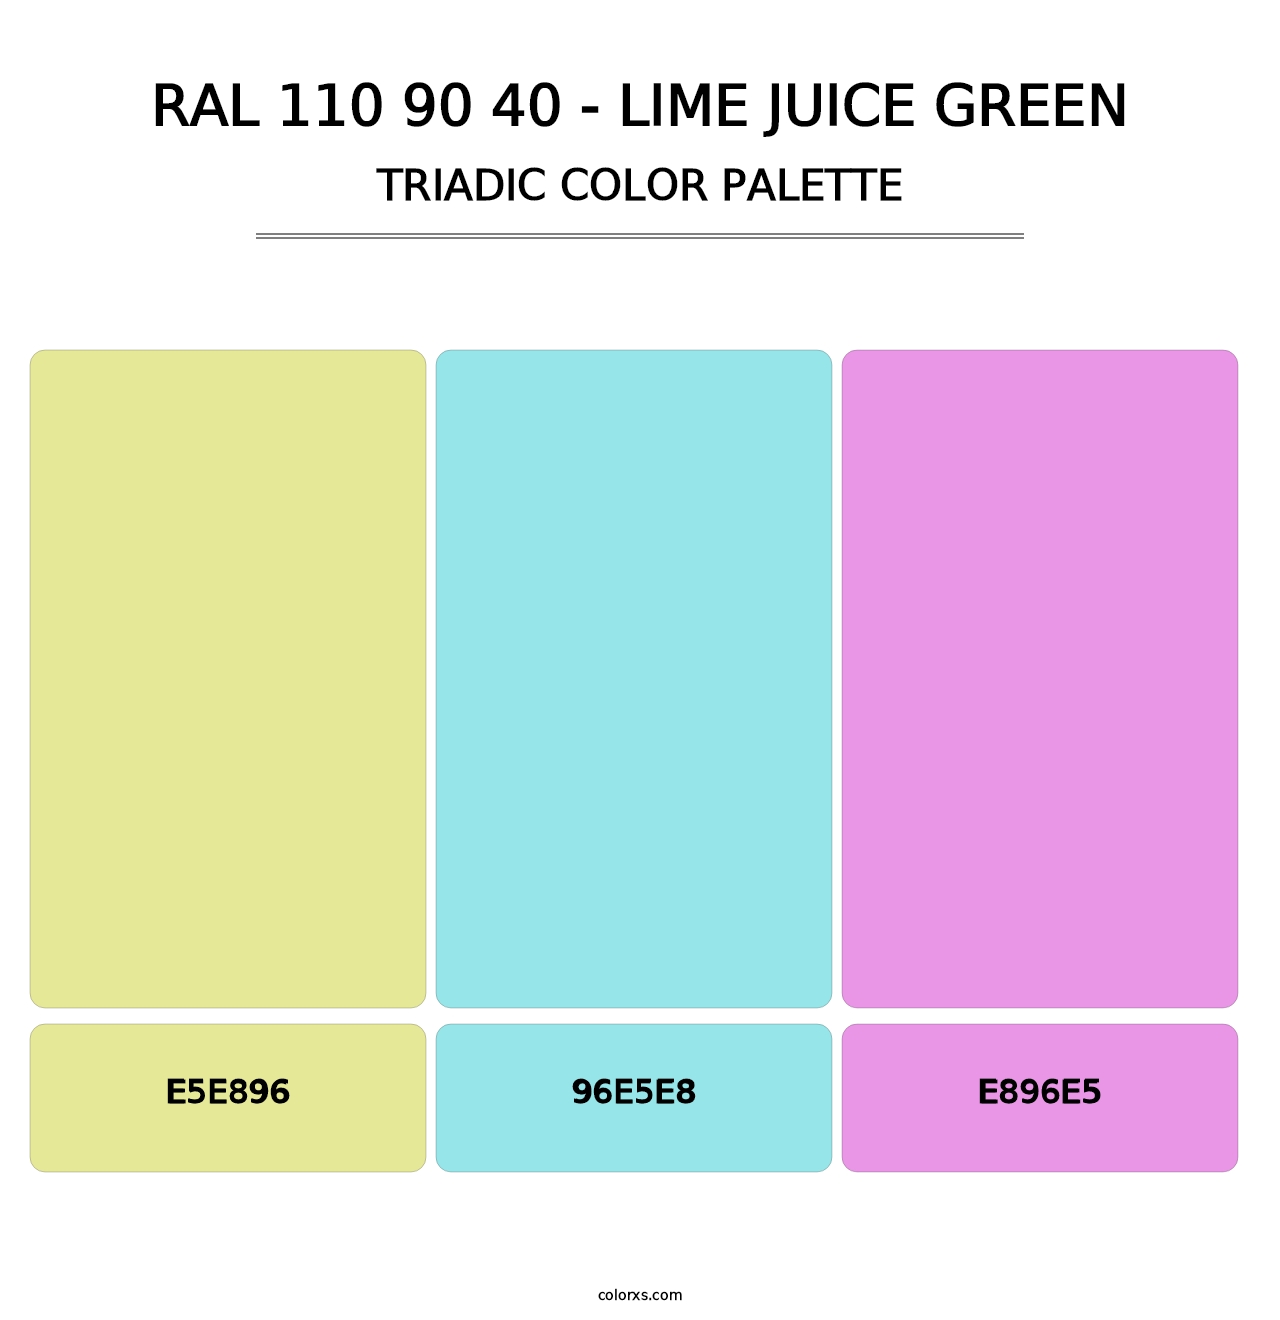 RAL 110 90 40 - Lime Juice Green - Triadic Color Palette